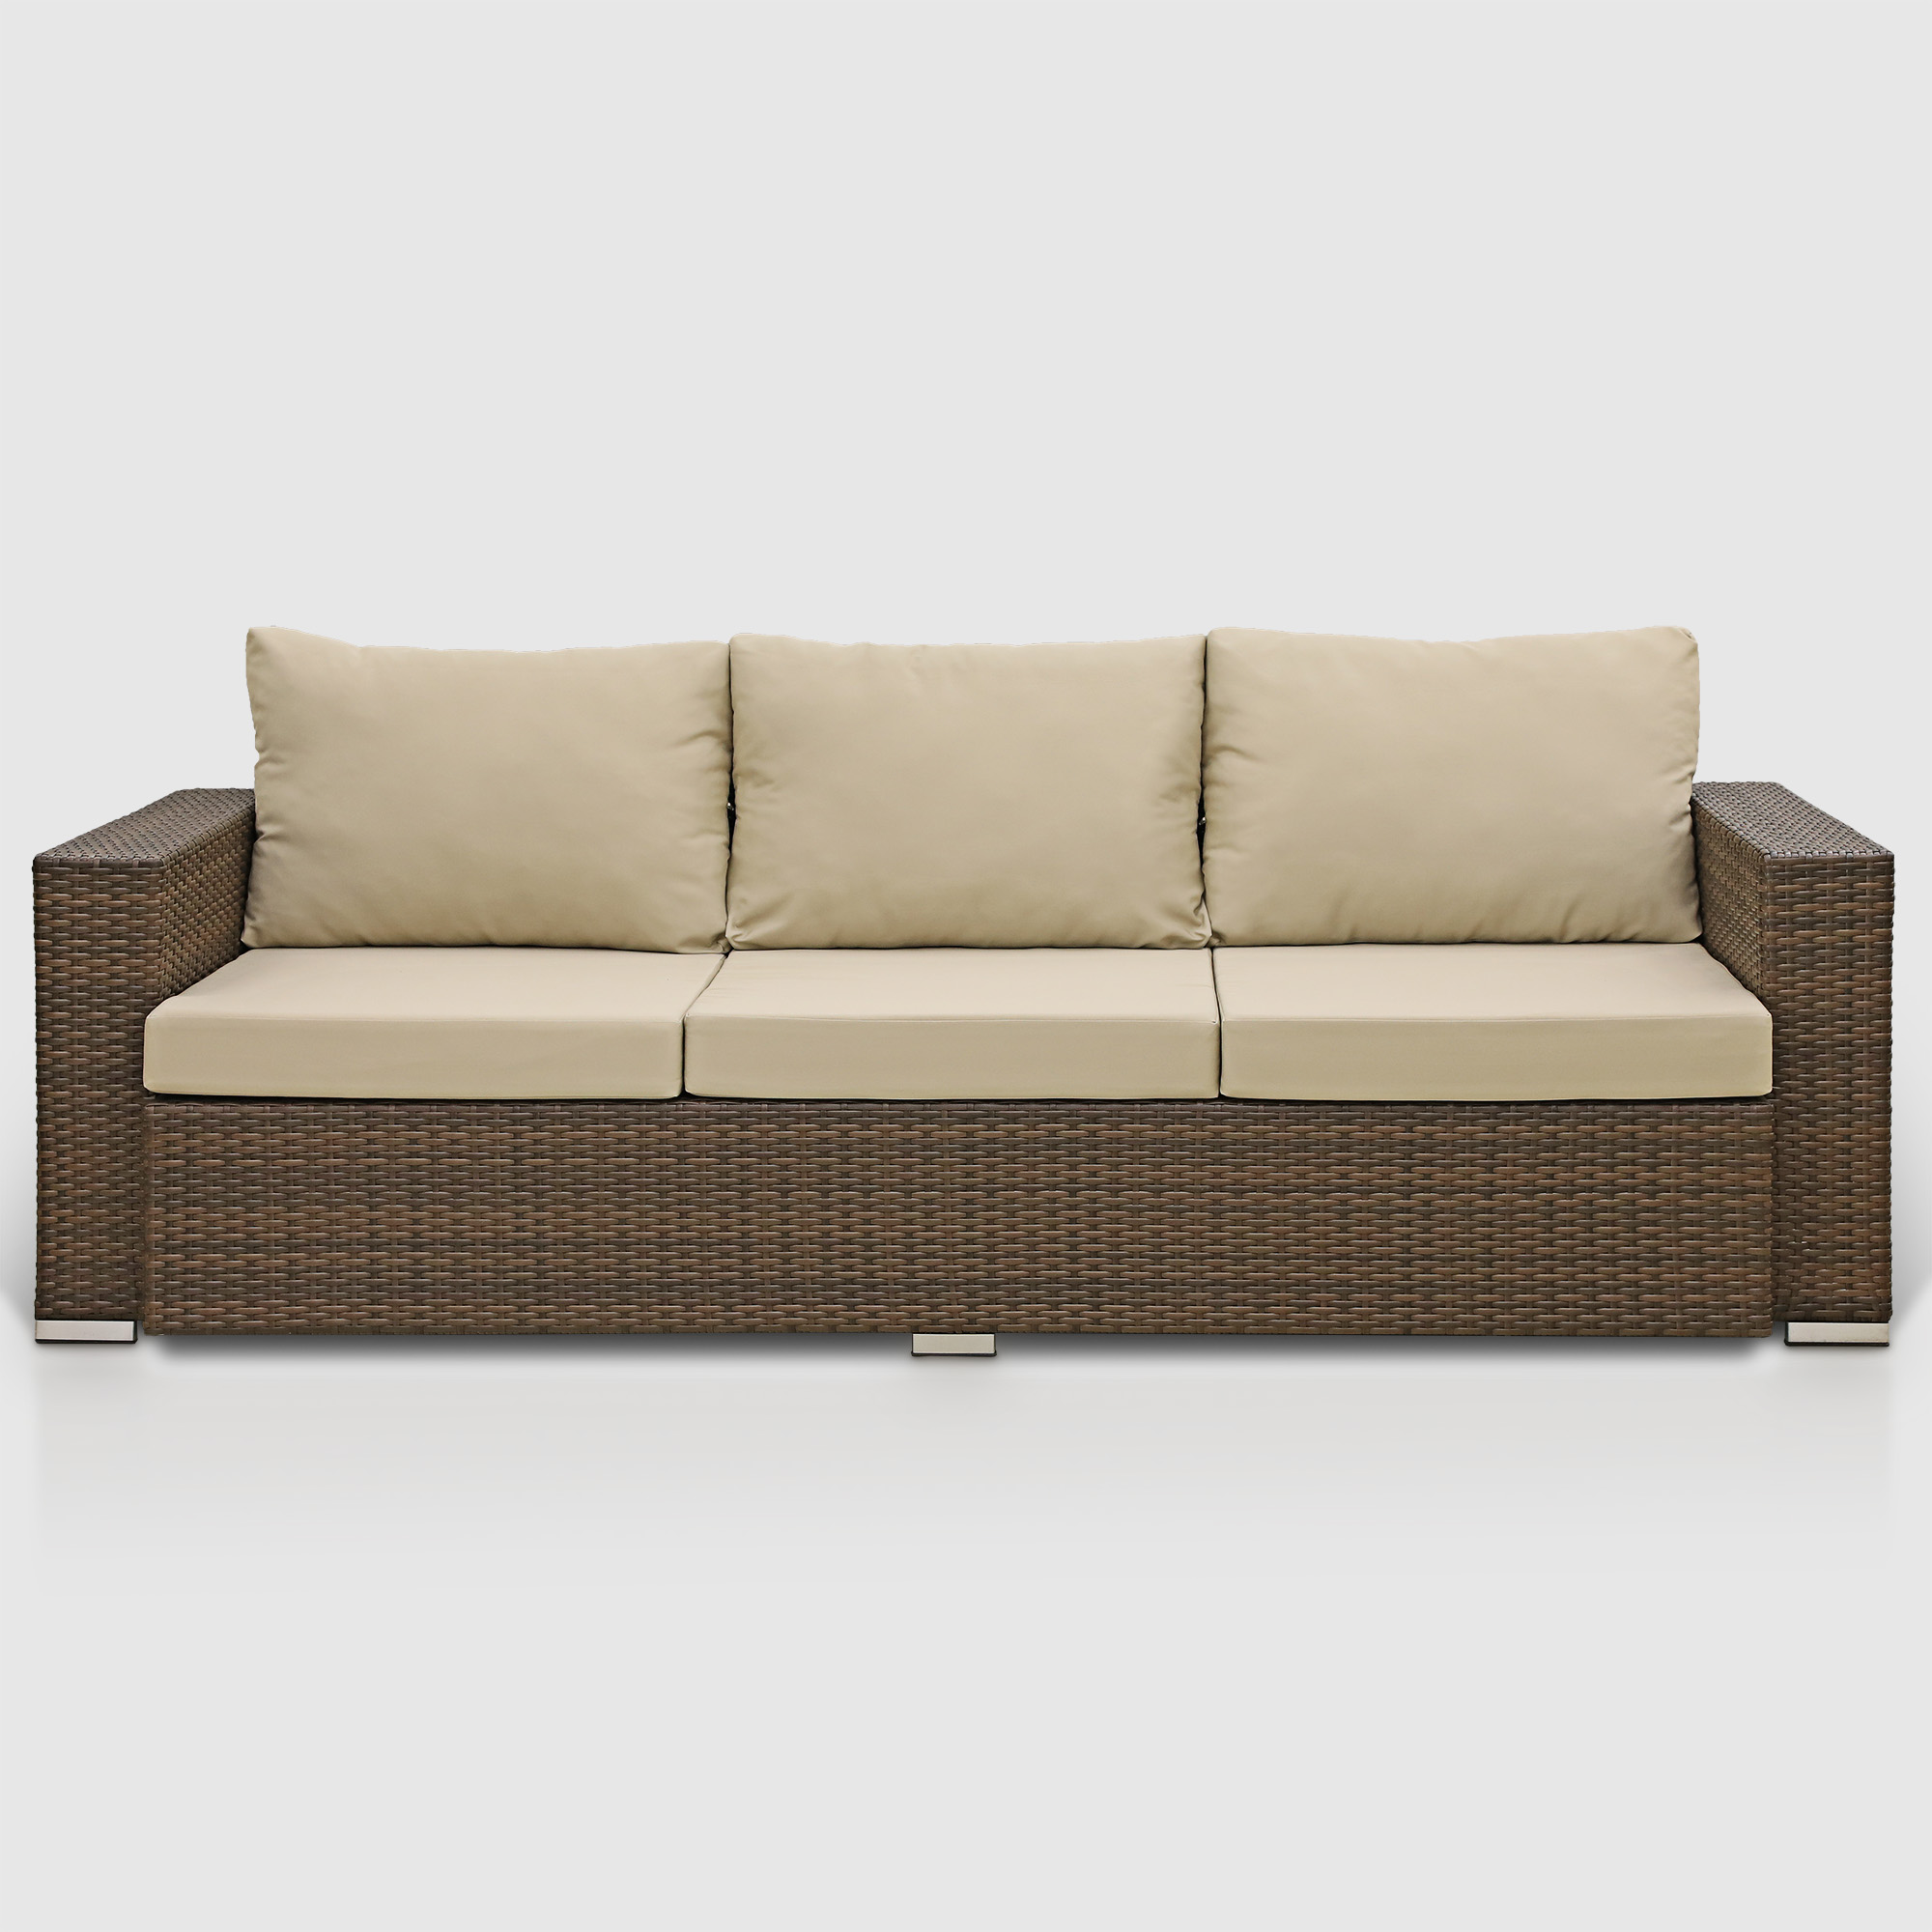 Комплект мебели Ns Rattan Cleo коричневый с бежевым 7 предметов, цвет бежевый, размер 224х88х70 - фото 13